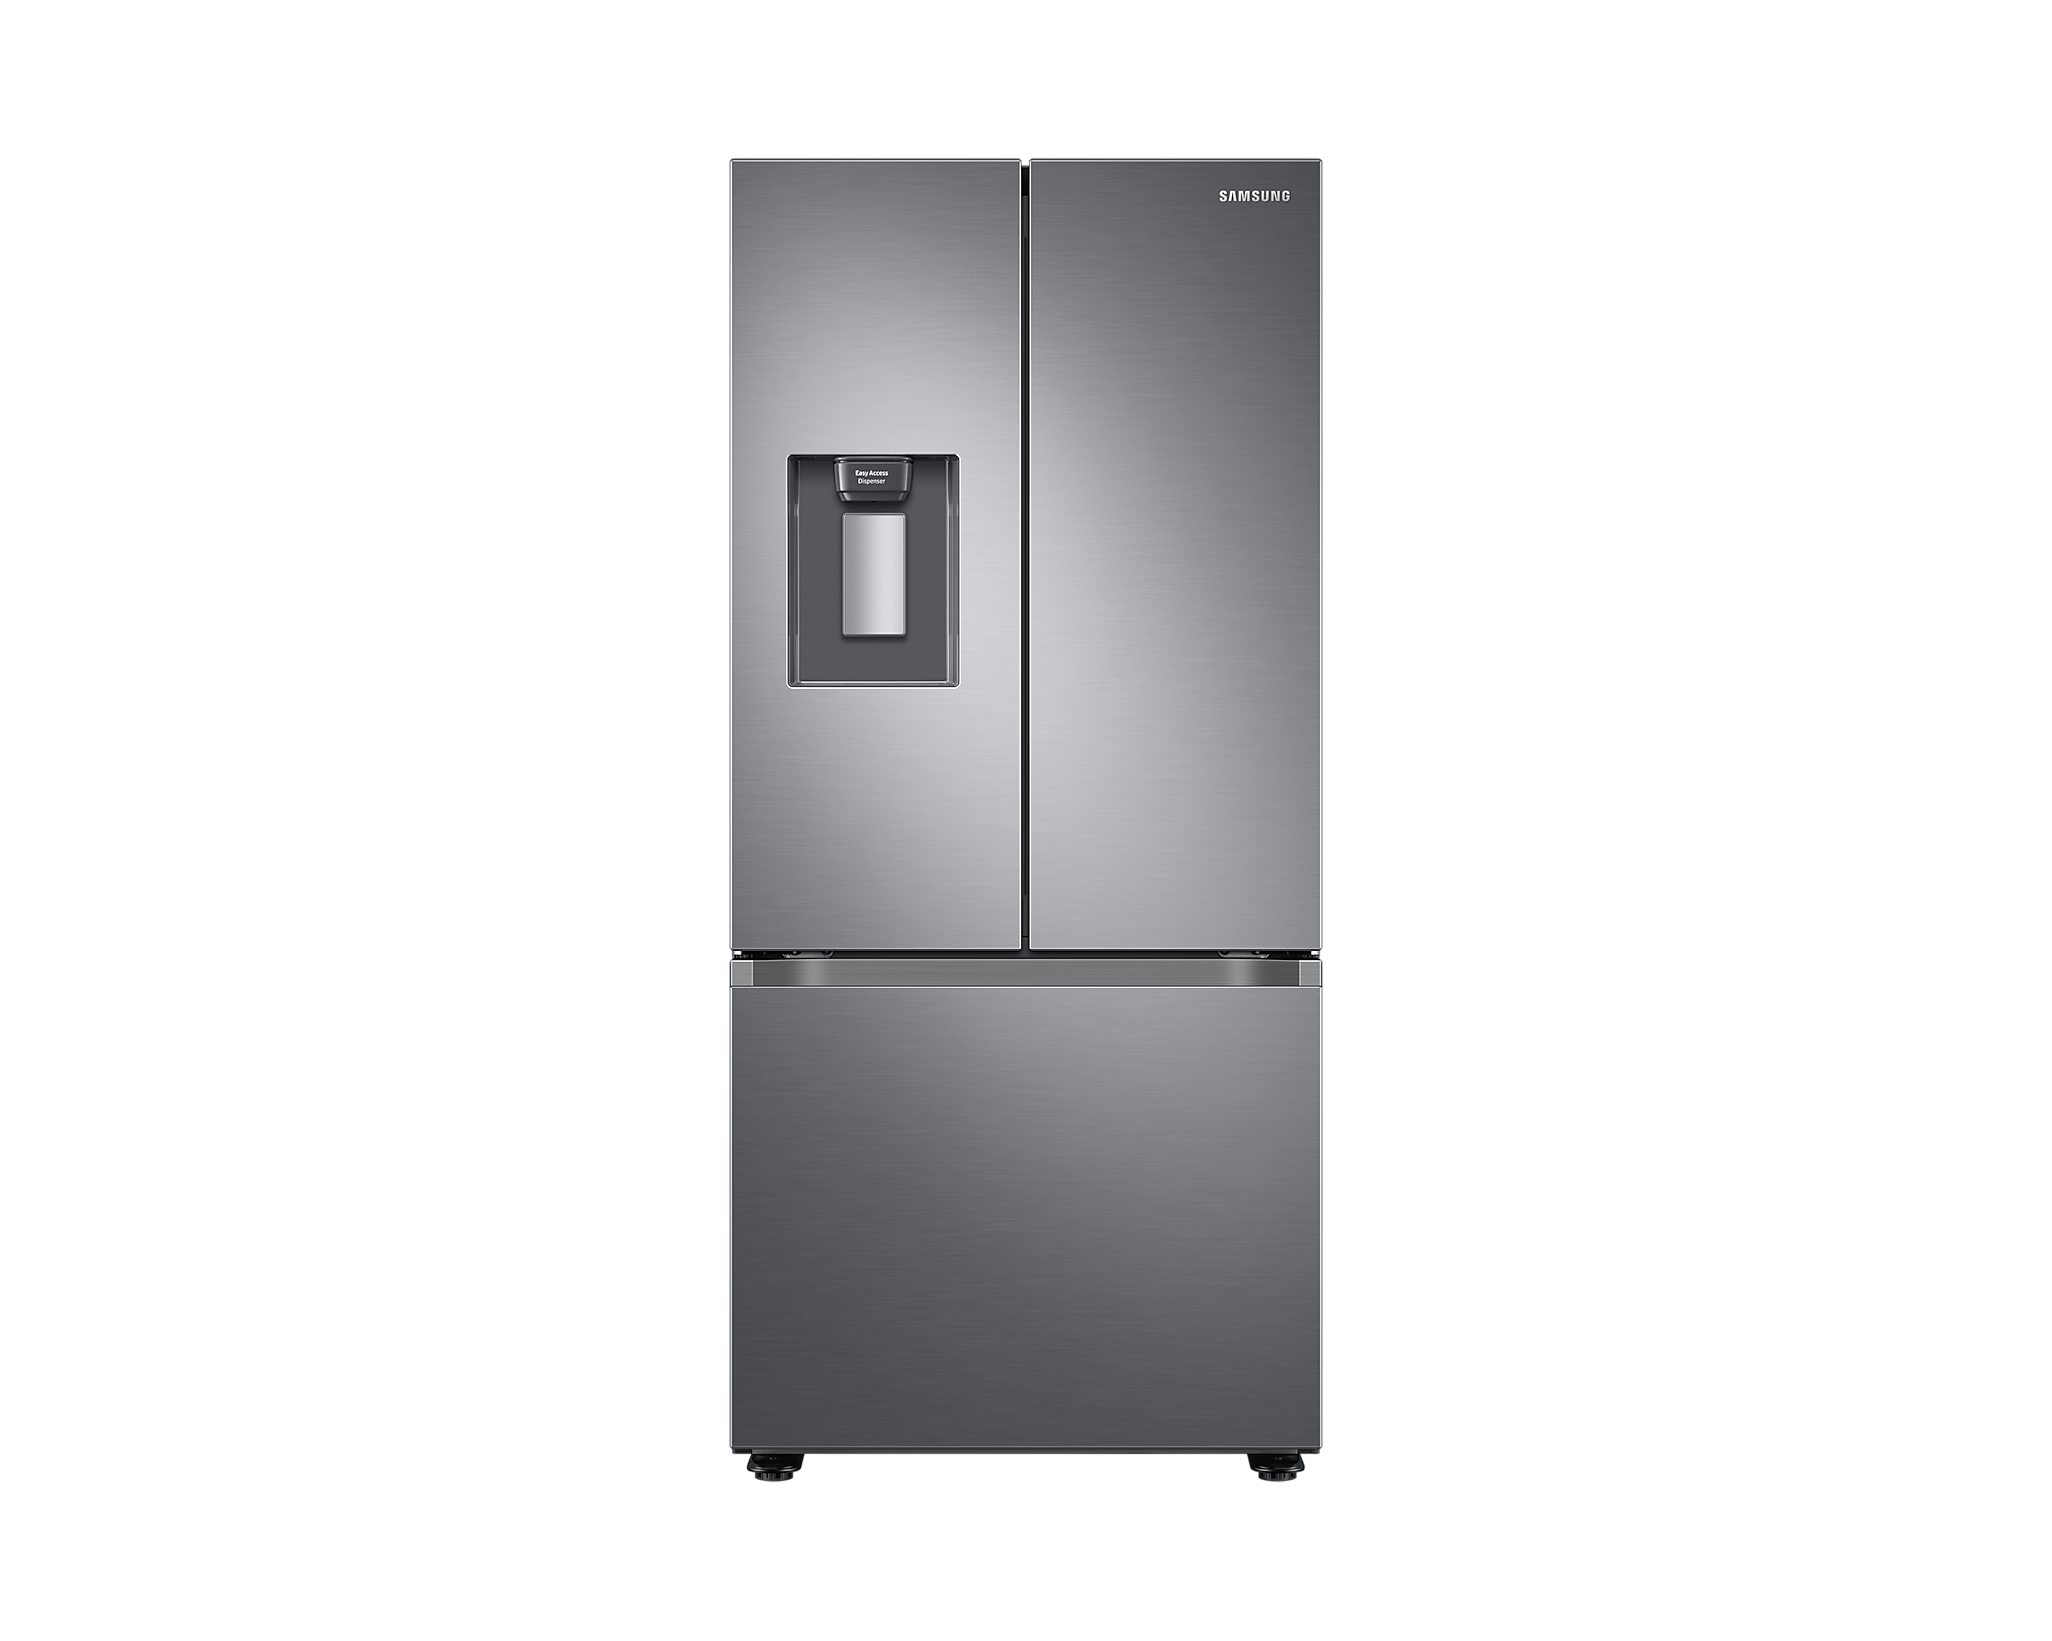 Samsung 22 Cu. Ft. French Door Refrigerator - Silver